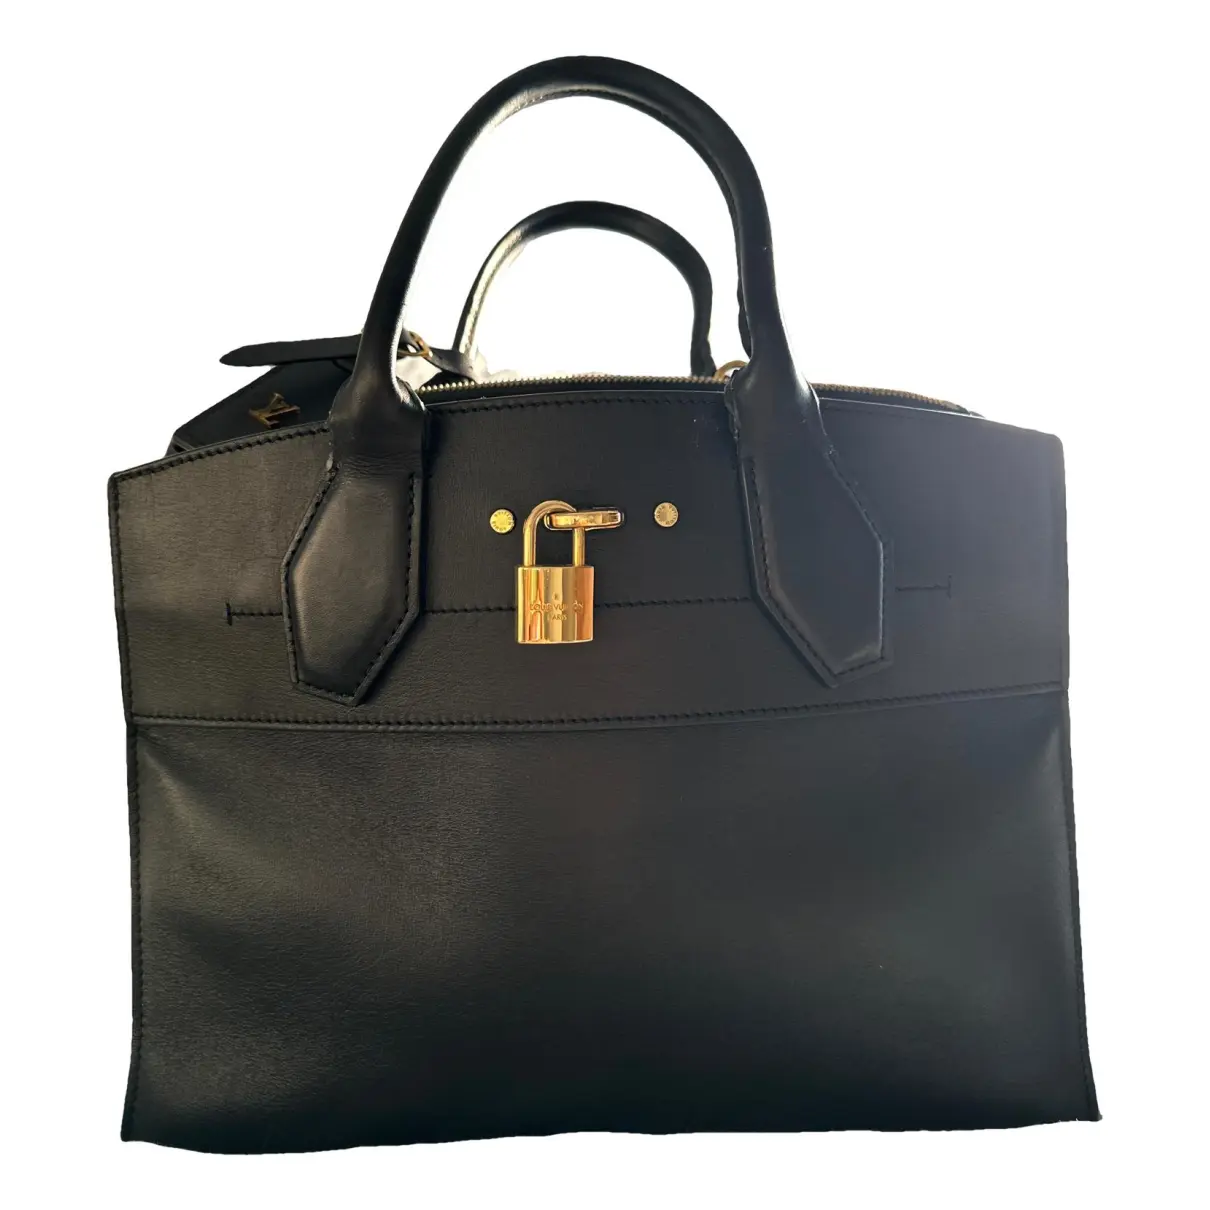 City Steamer leather handbag